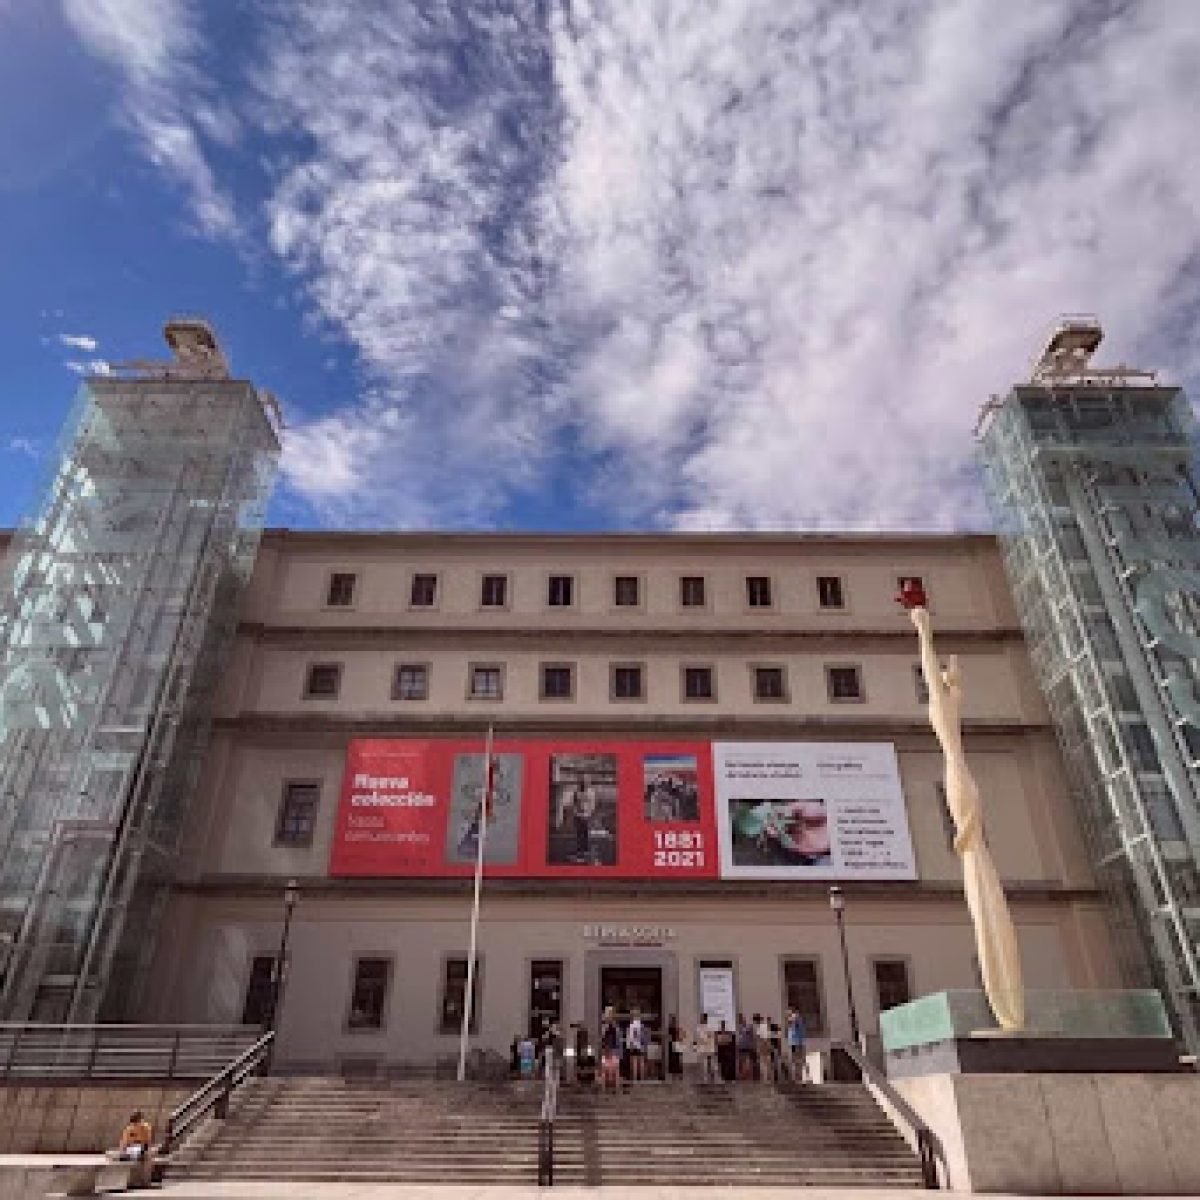 Museo Reina Sofía de Madrid